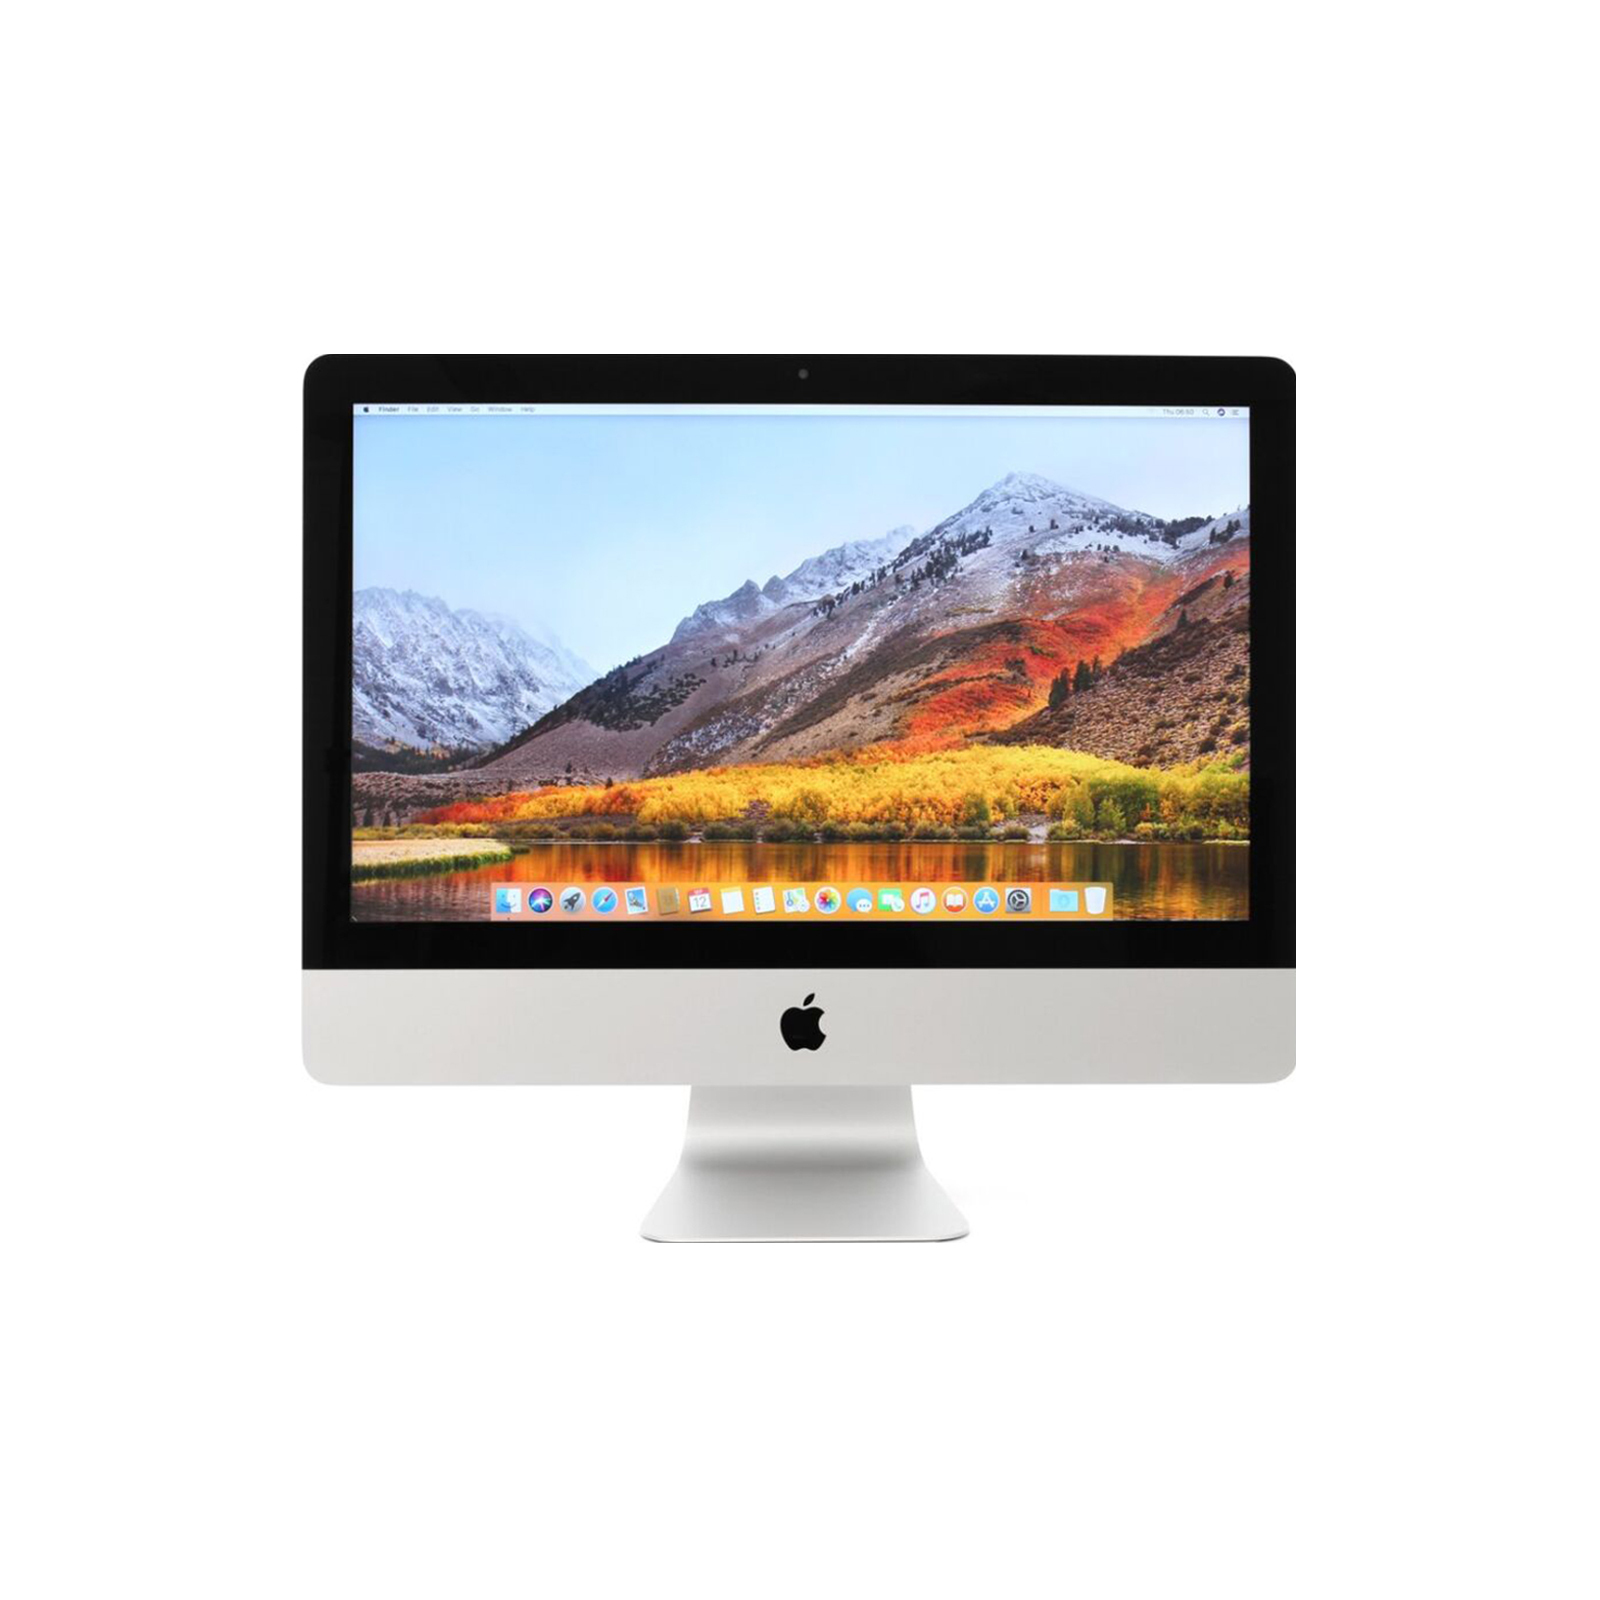 iMac 21.5" Mid 2014 - Core i5 1.4Ghz / 8GB RAM / 1TB HDD 